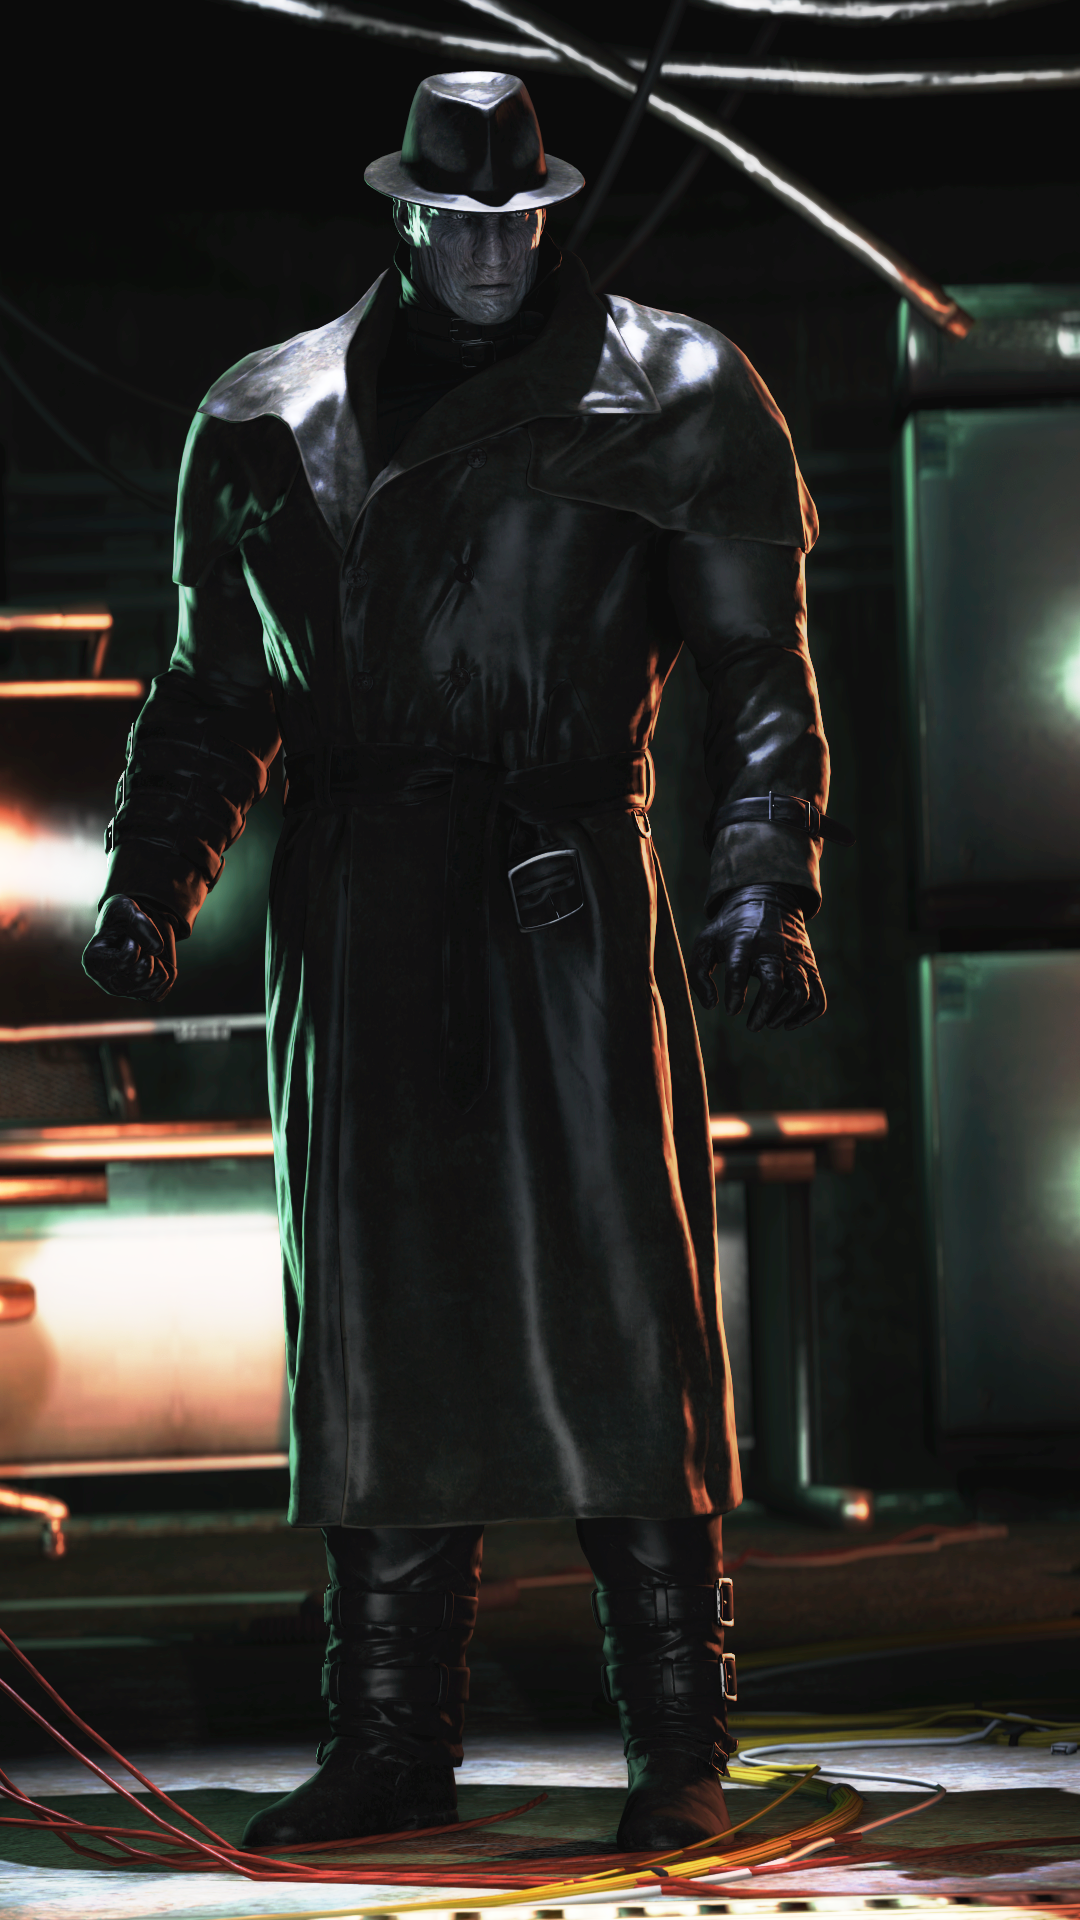 Mr. X - Tyrant - Resident Evil 2 by Pr0metheus-RF on DeviantArt